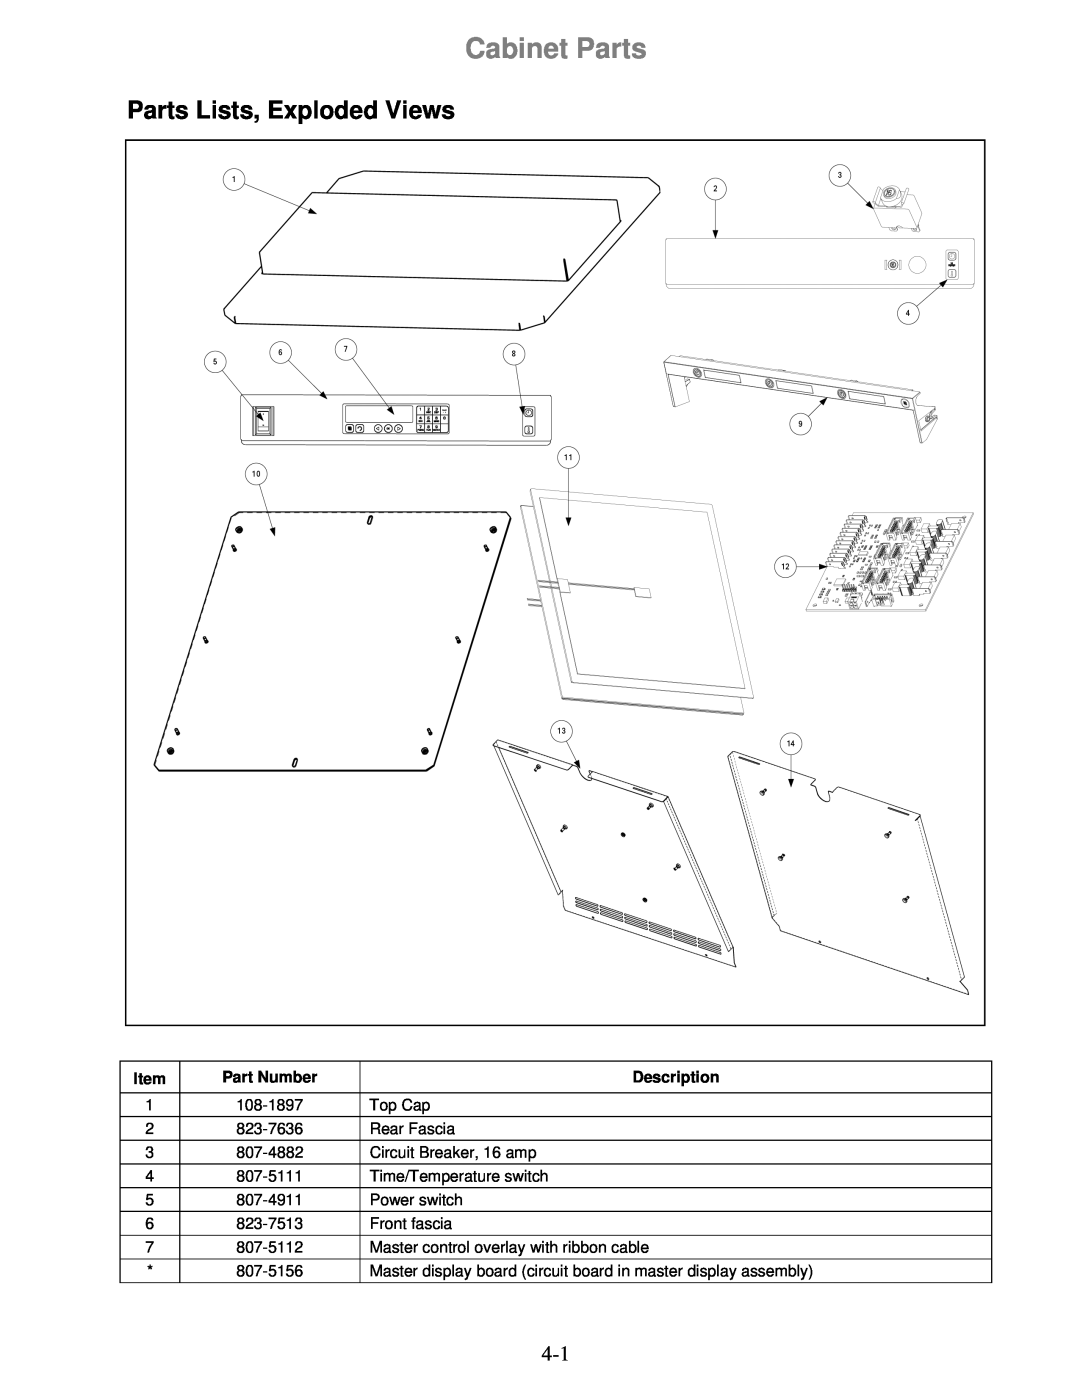 Frymaster 8196606 manual Cabinet Parts, Parts Lists, Exploded Views, Item, Part Number, Description 